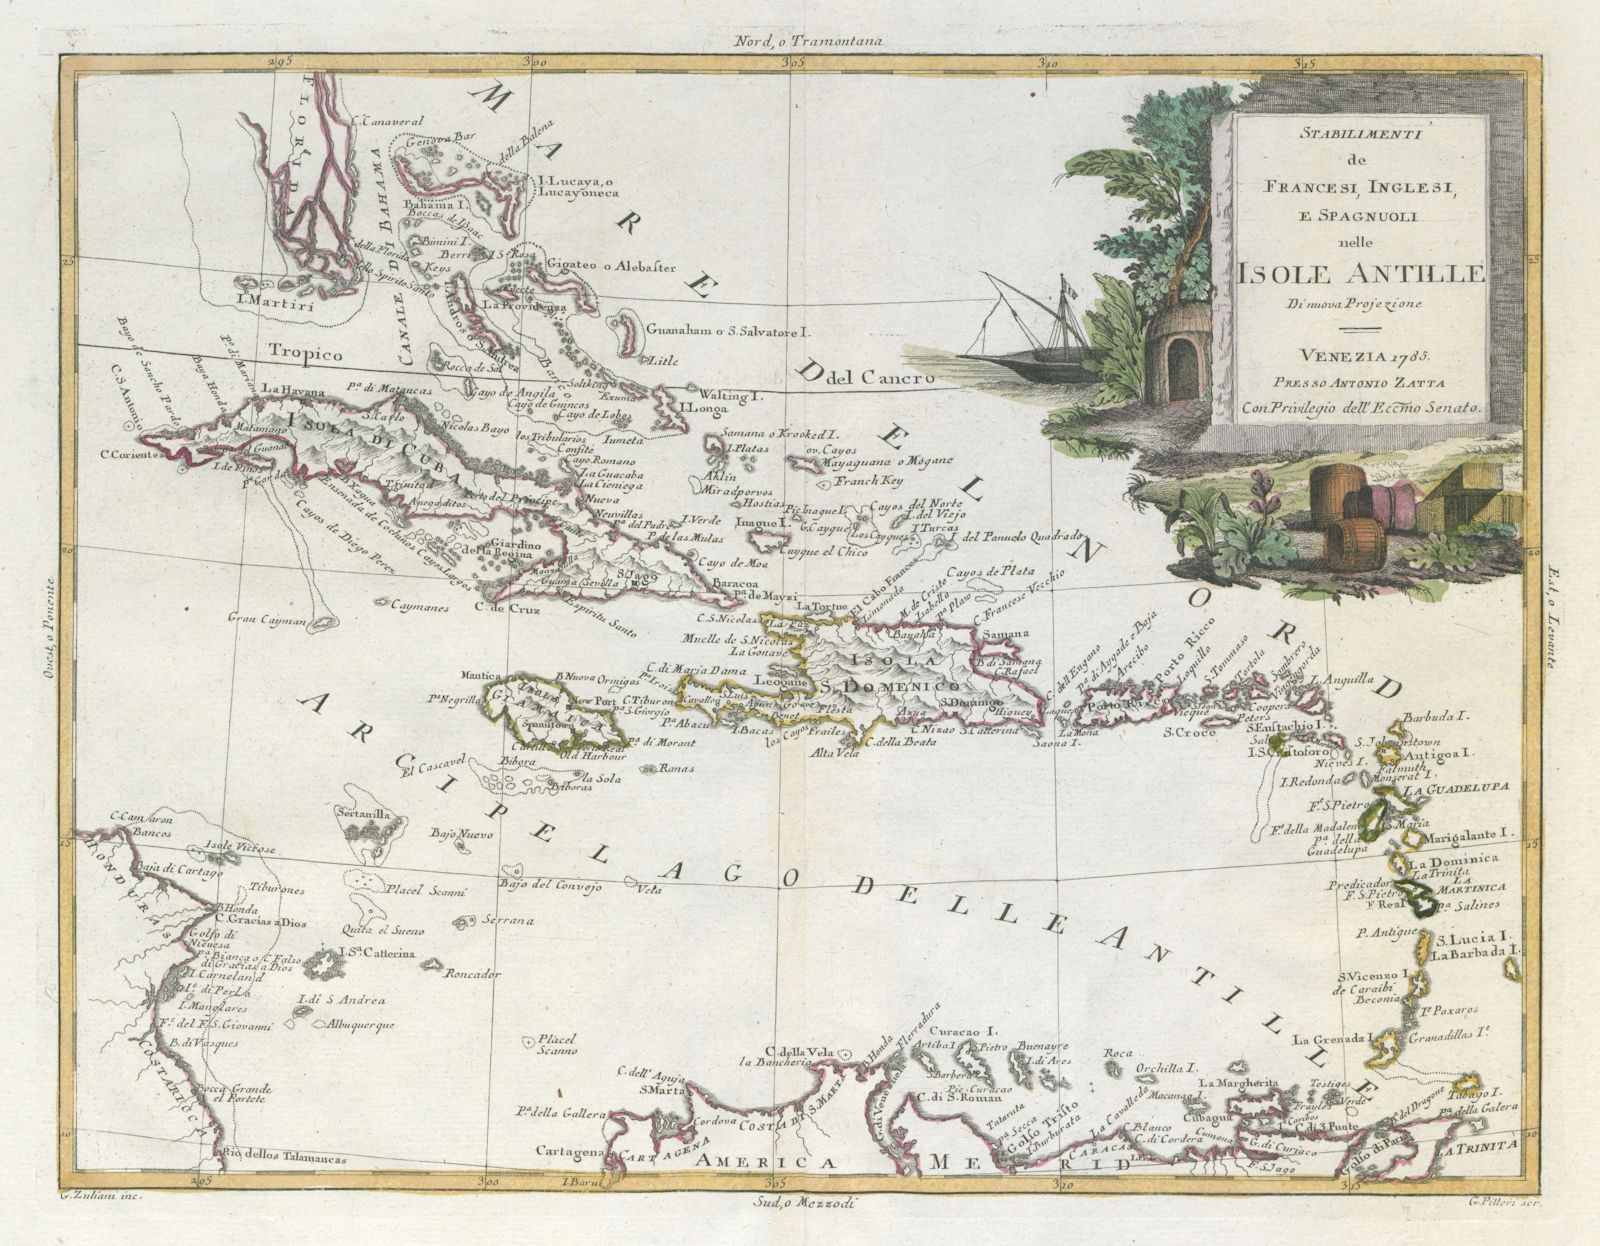 "Stabilimenti de Francesi, Inglesi… isole Antille". Caribbean. ZATTA 1785 map